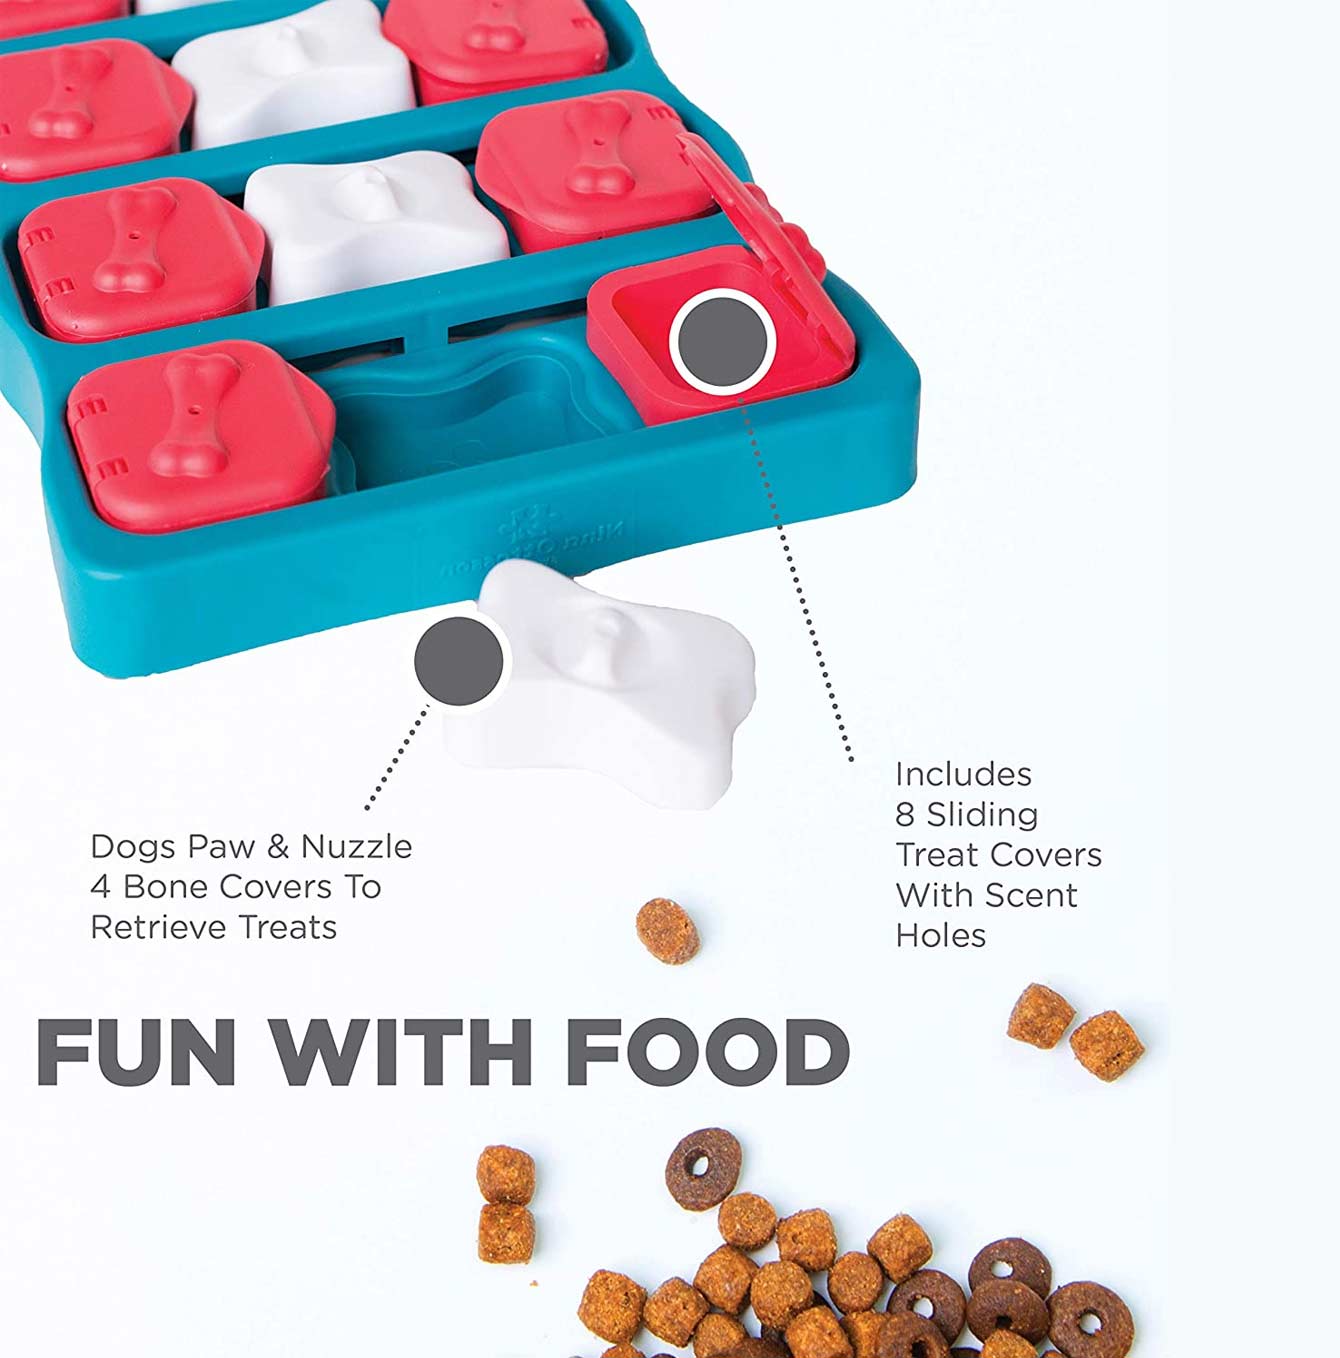 Dog Treat Maze, Nina Ottoson Interactive Toys